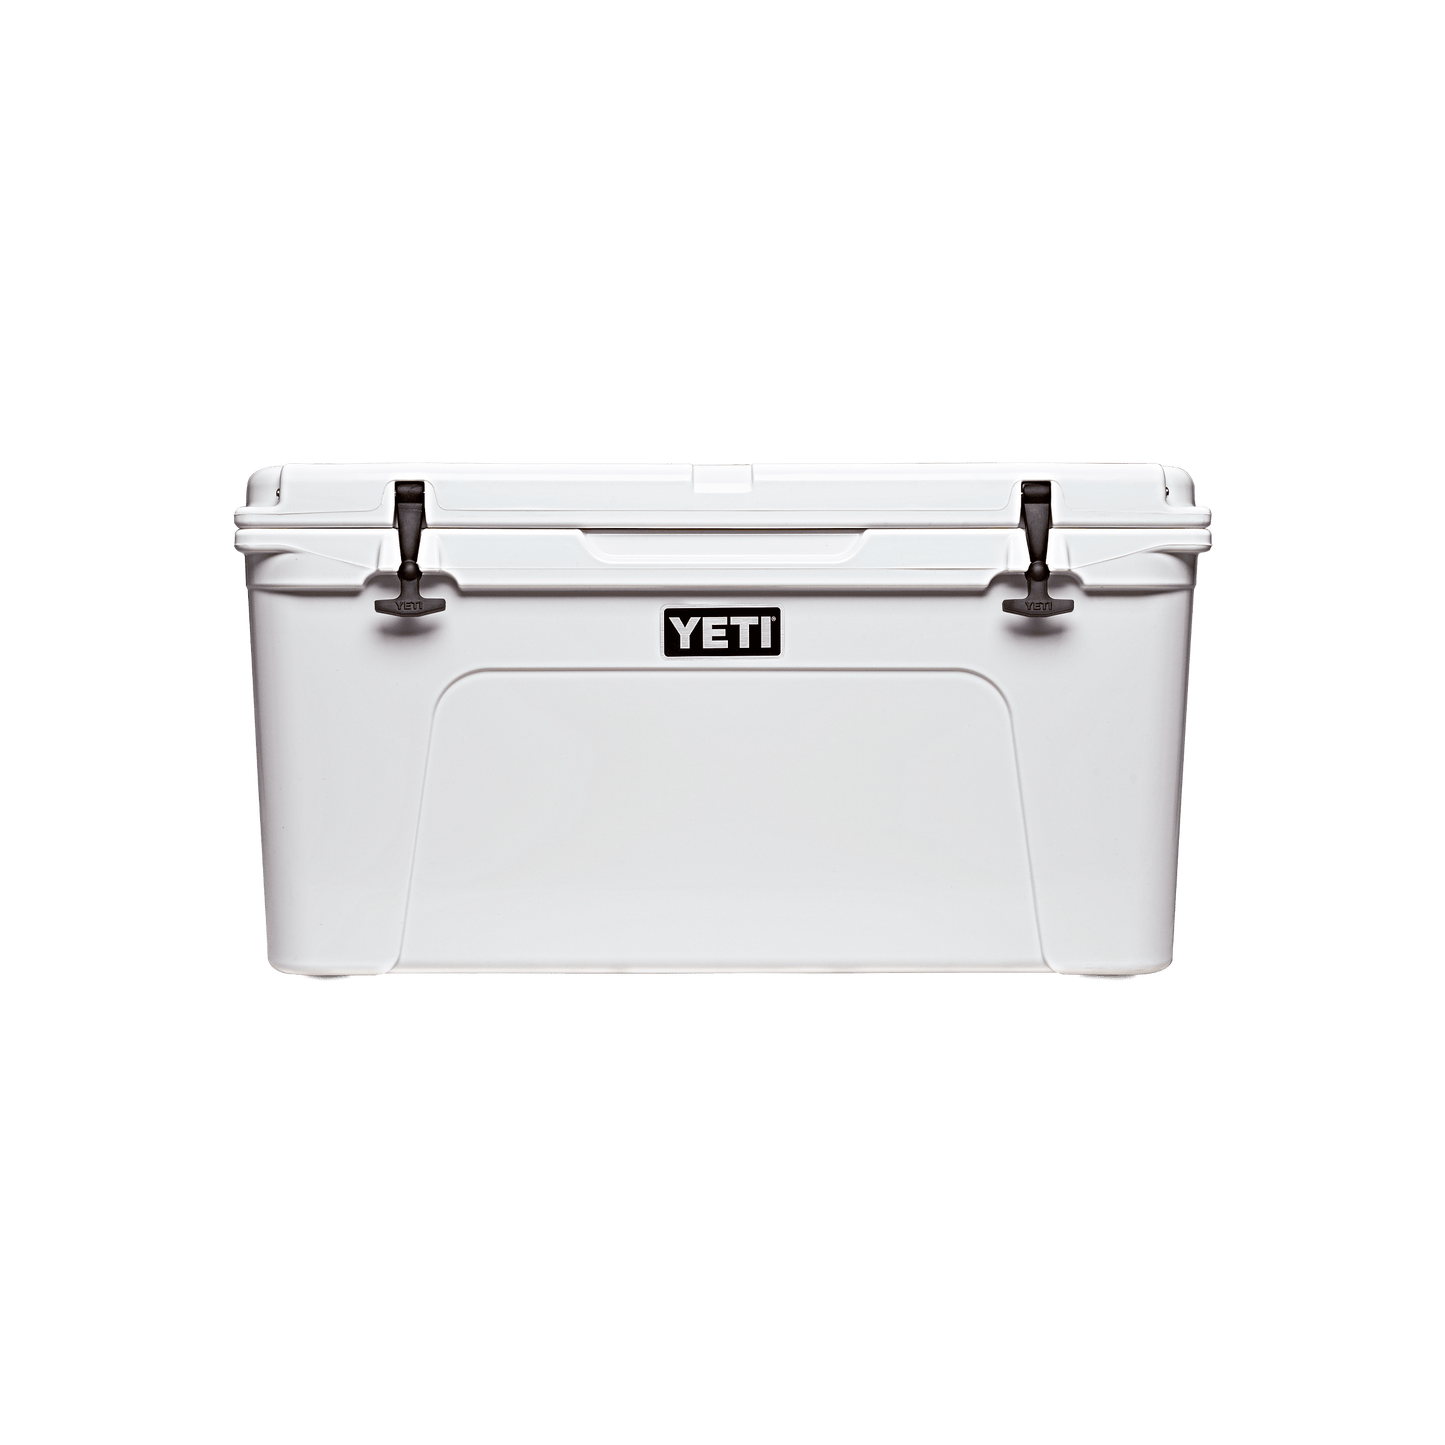 YETI Tundra® 75 Cool Box White